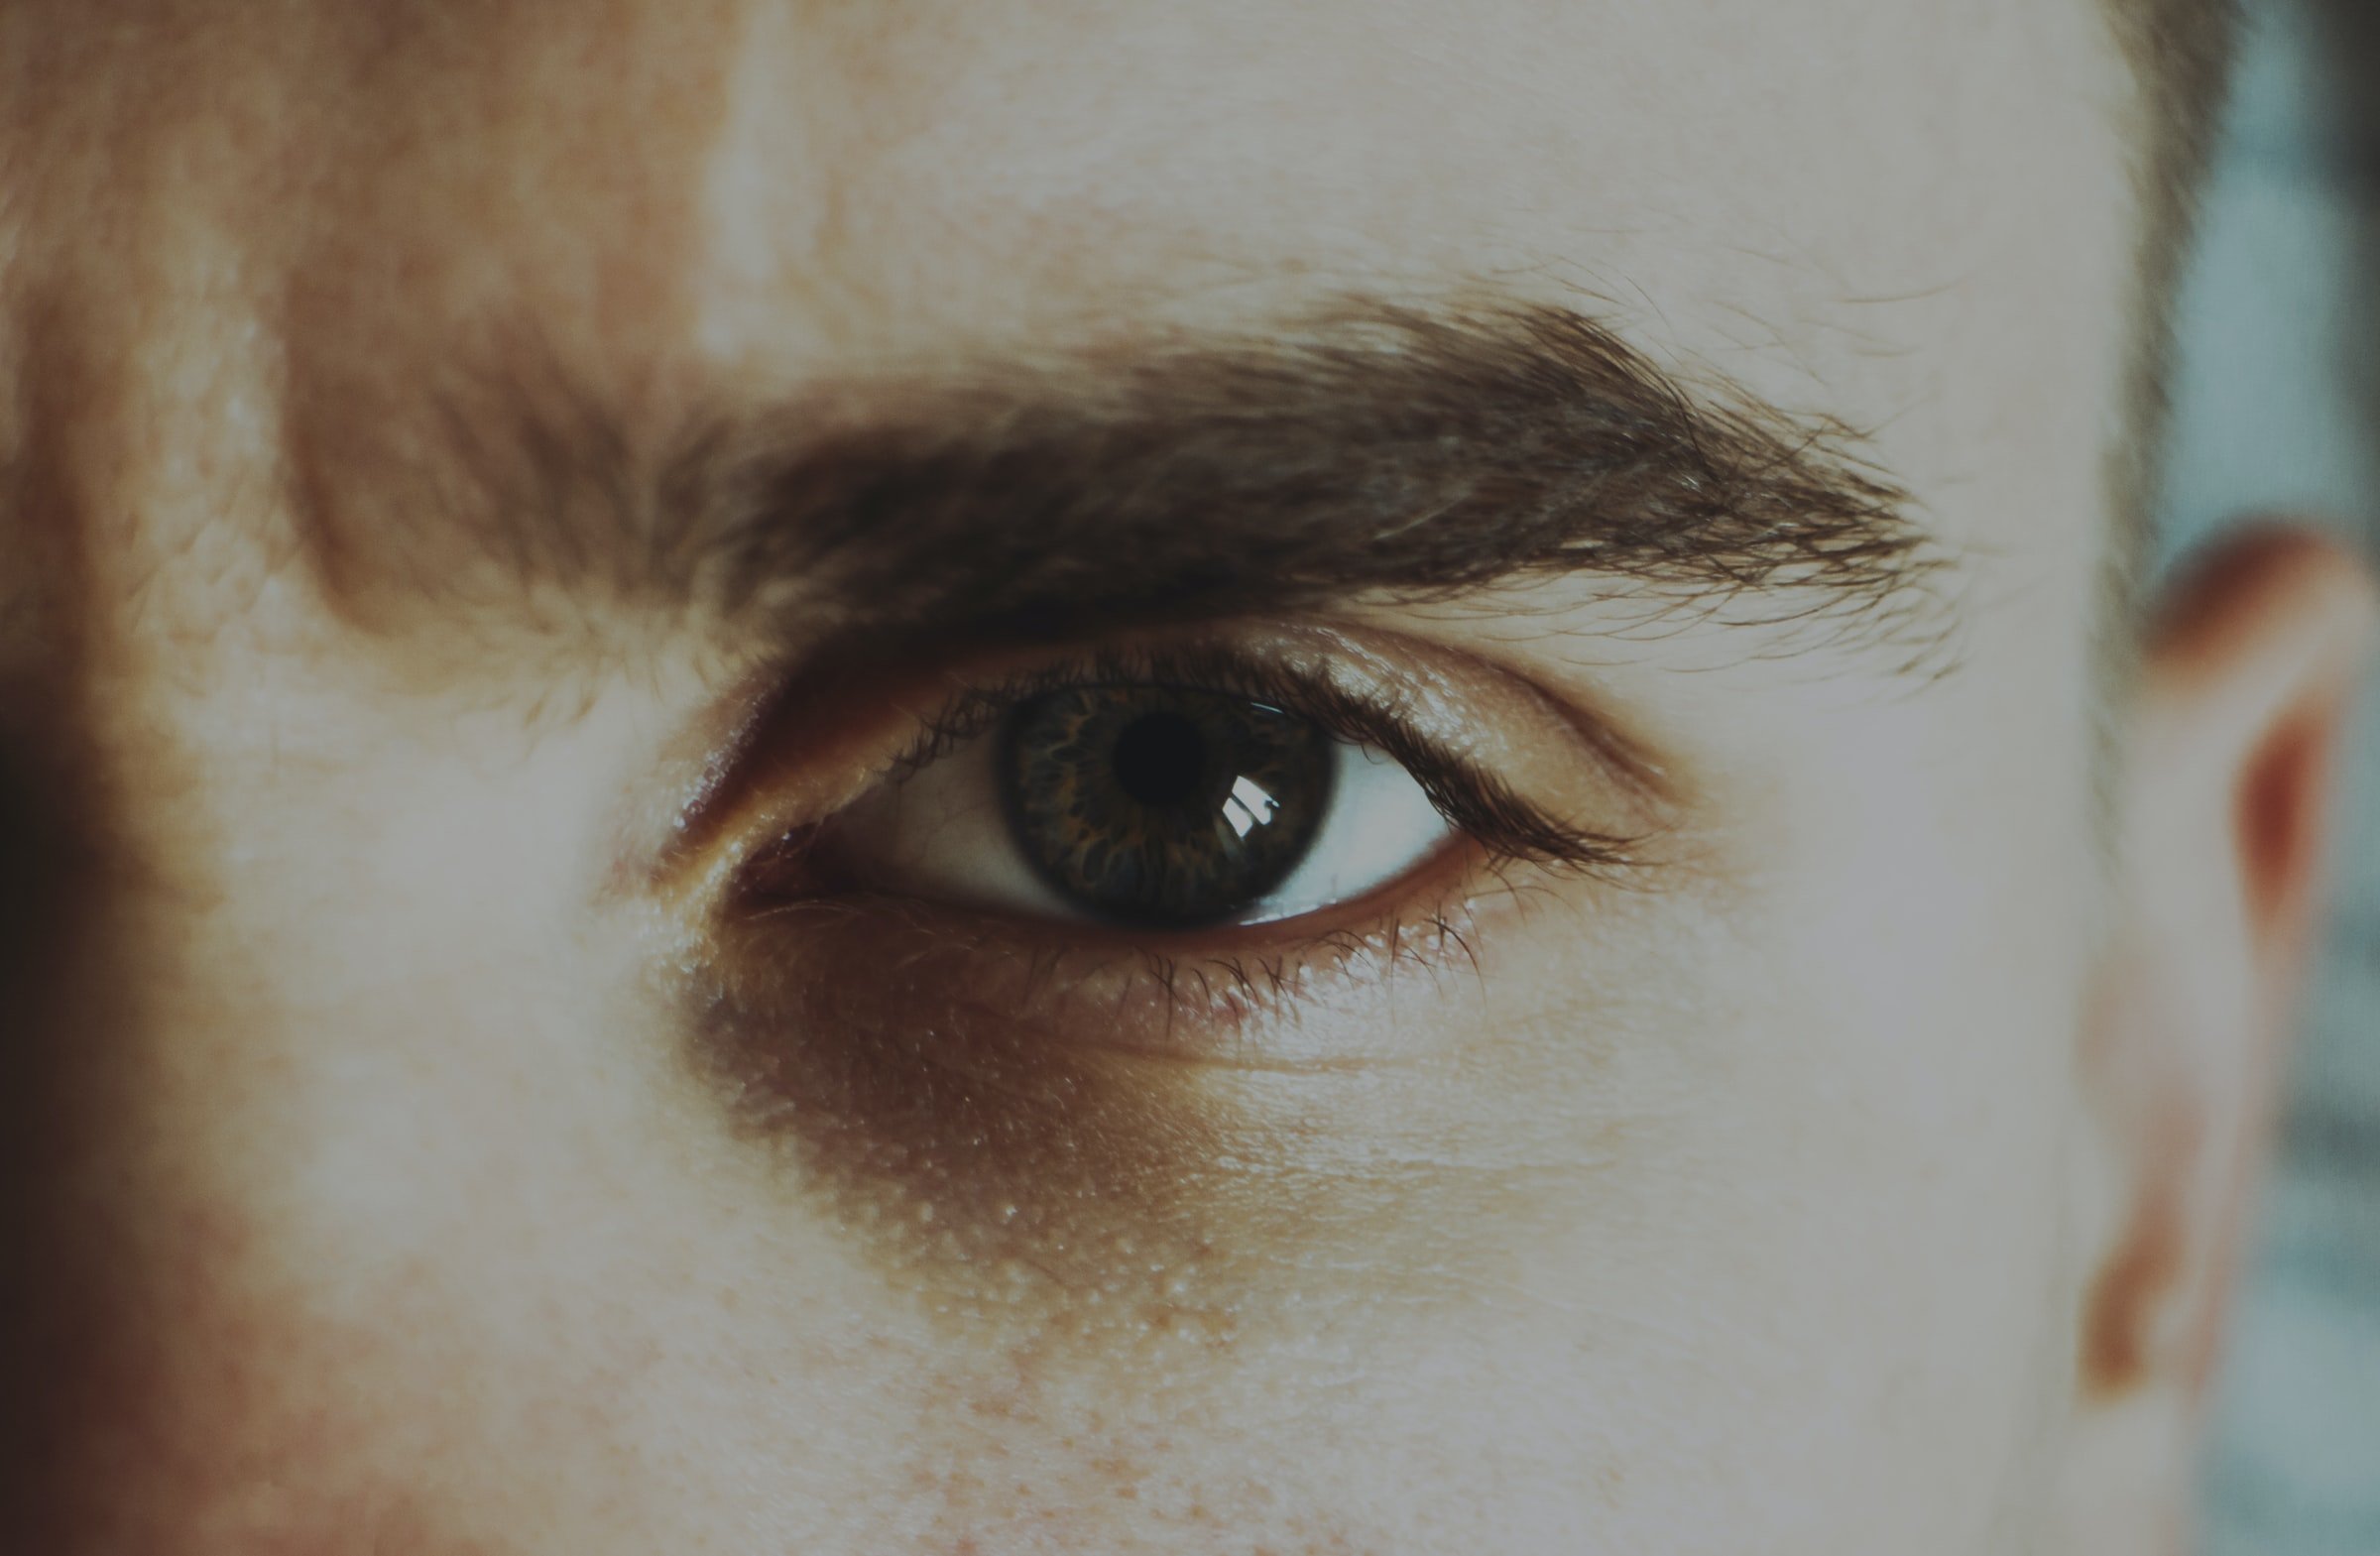 Close-up of a man's eye | Source: Unsplash